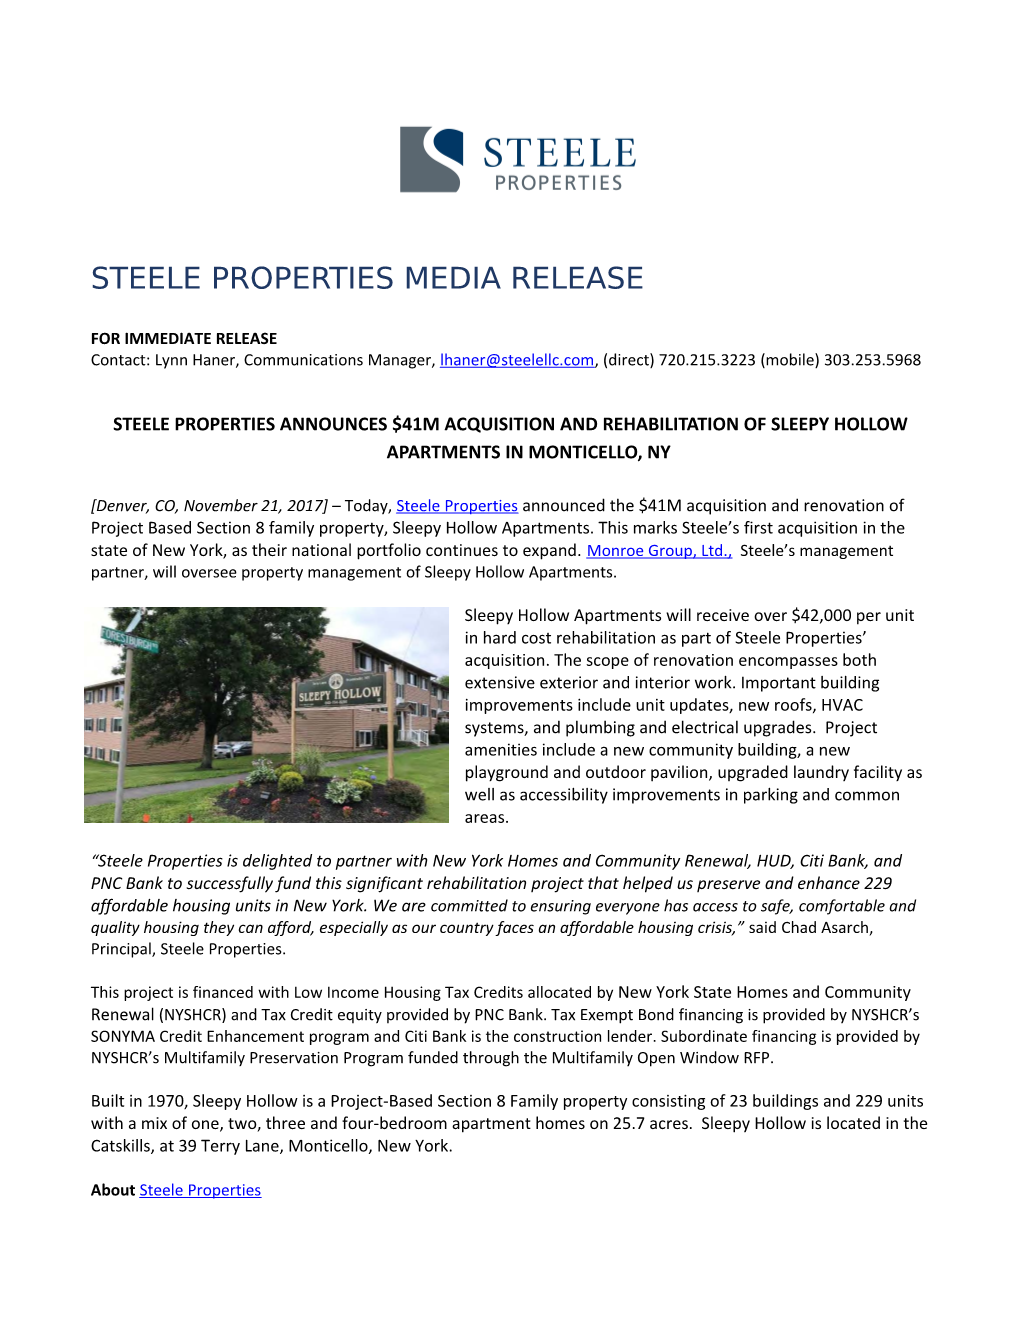 Steele Properties Media Release